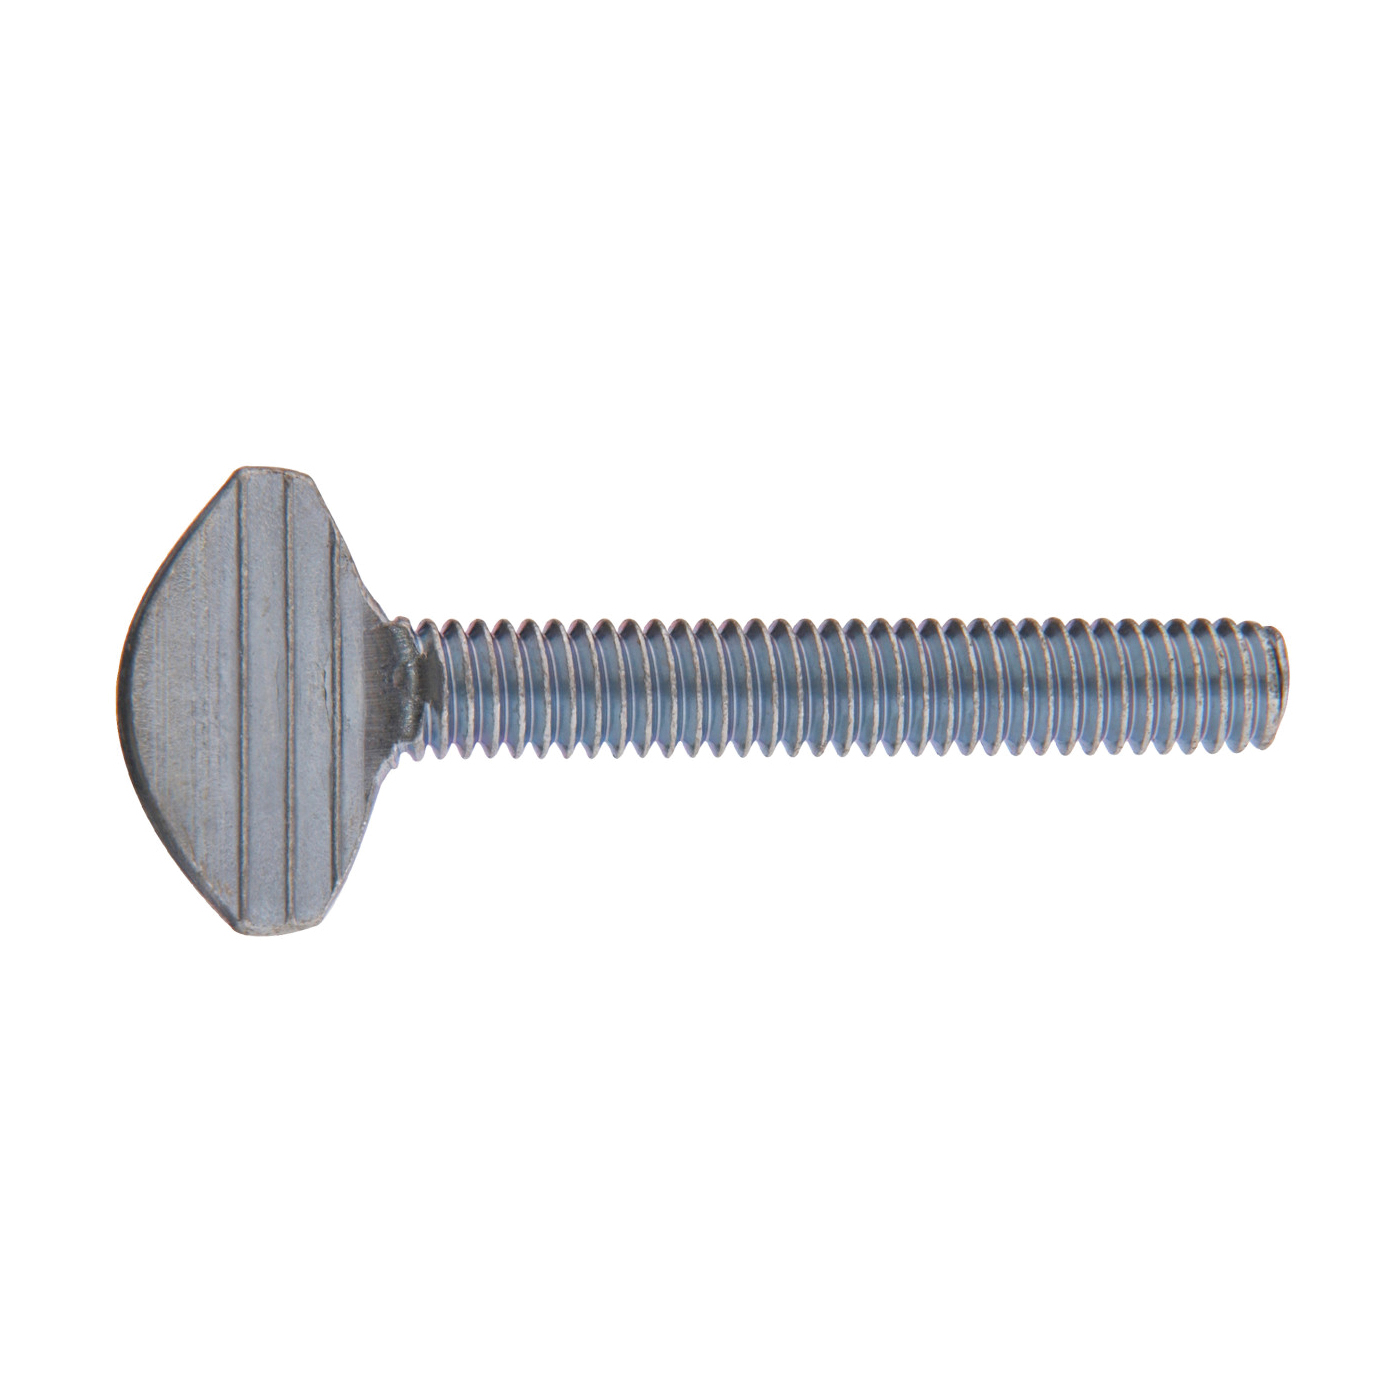 880952 Machine Screw, 1/4-20 Thread, 3/4 in L, Coarse Thread, Blunt Point, Steel, Zinc-Plated